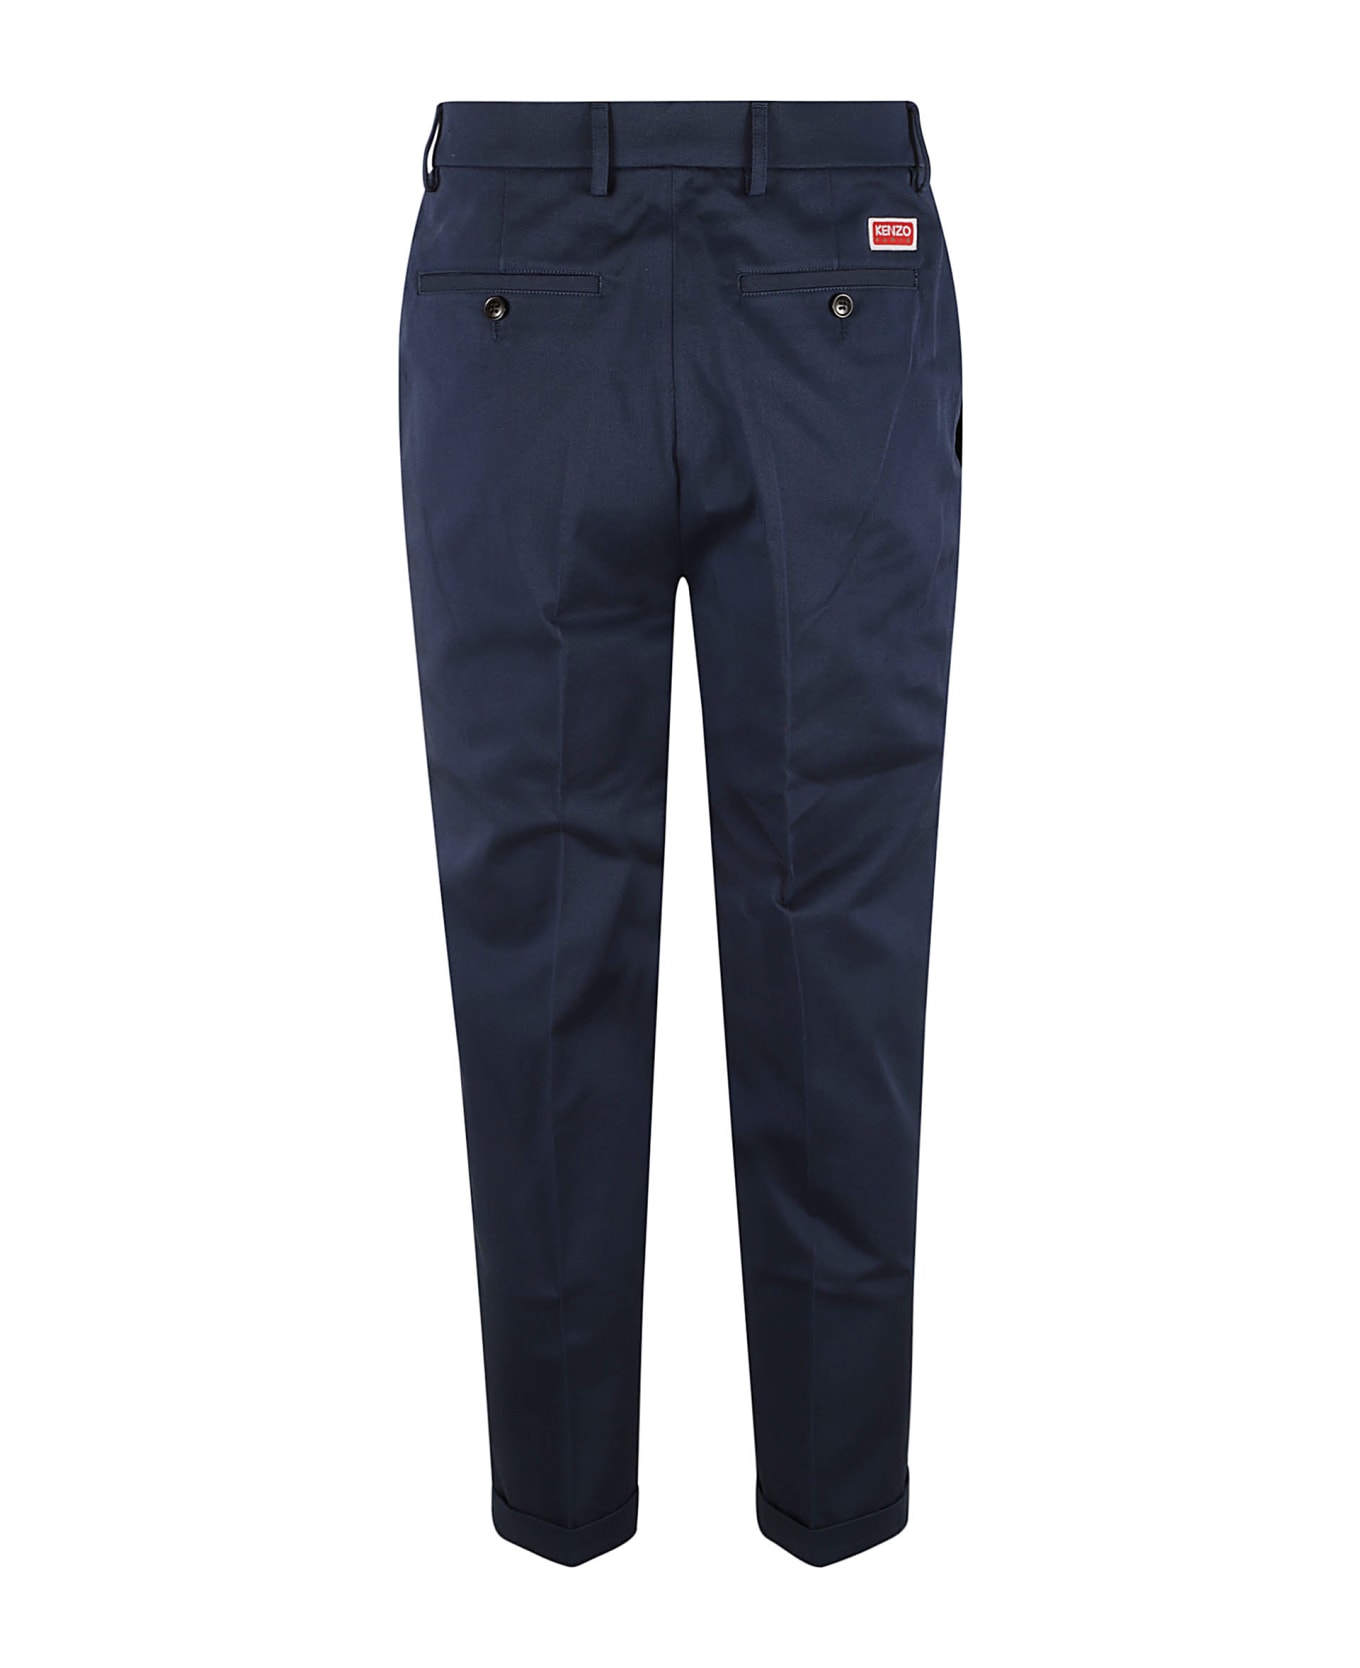 Kenzo Classic Plain Trousers - Navy Blue